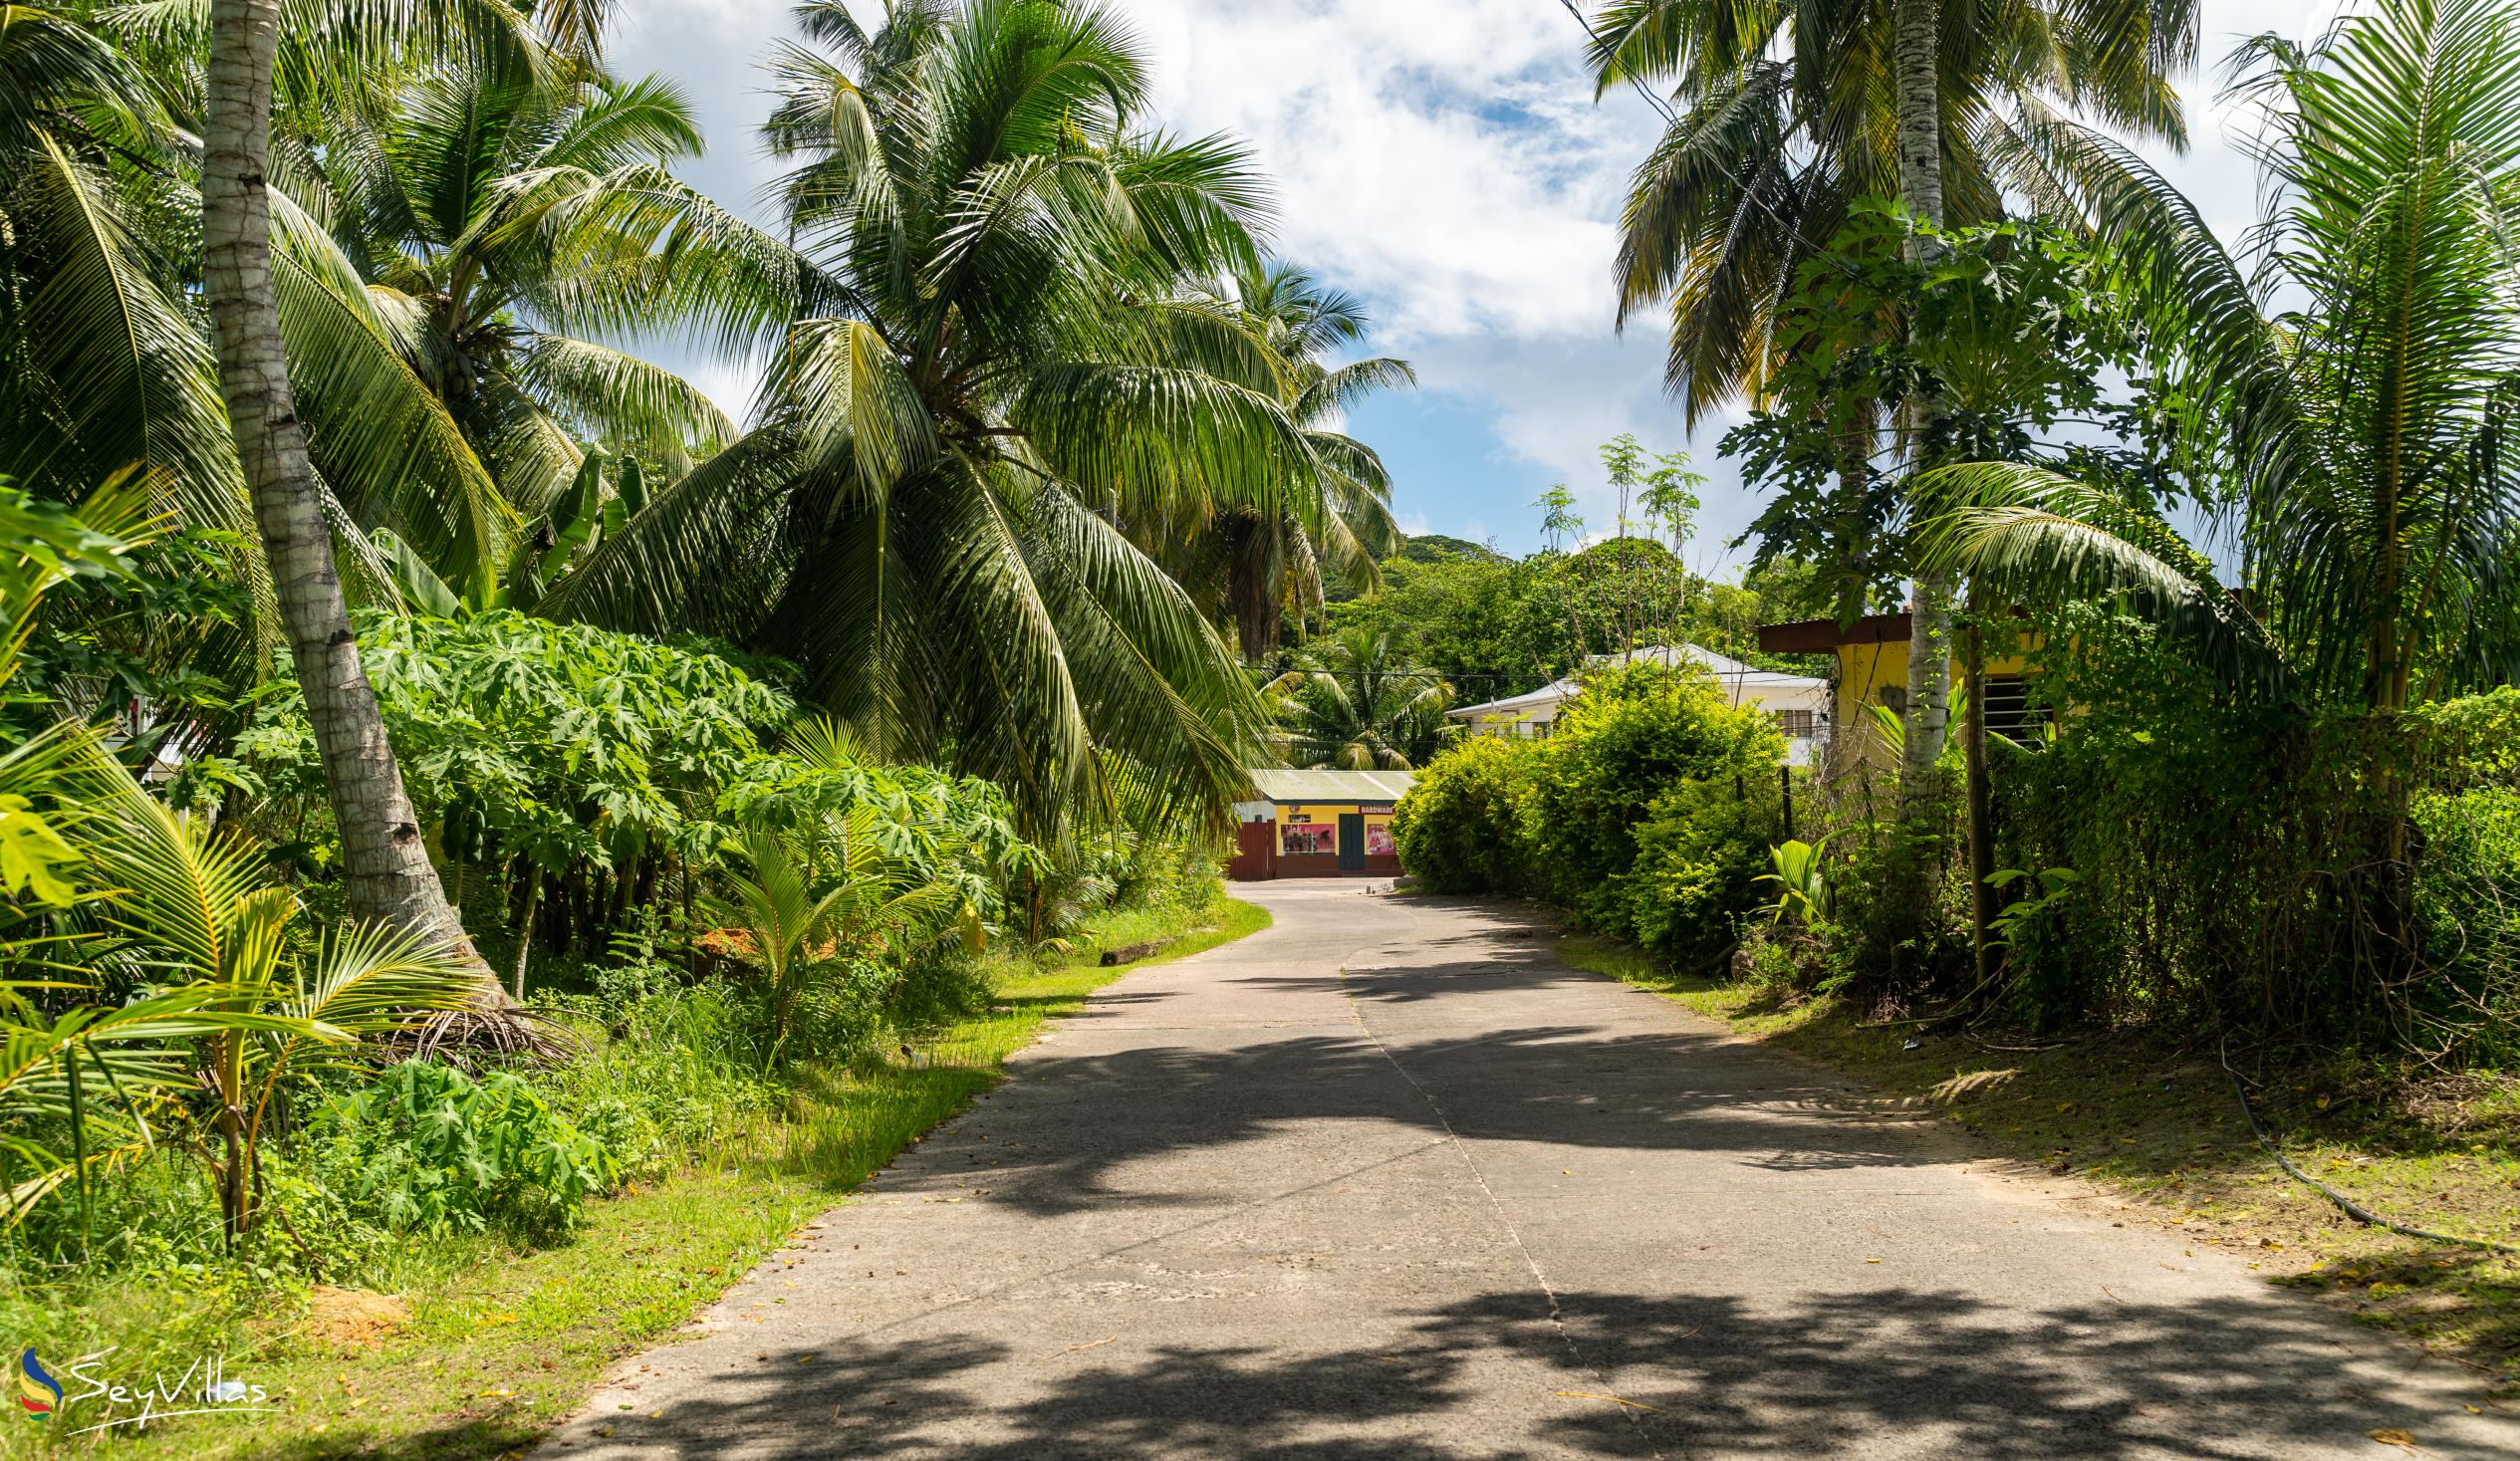 Foto 18: Paul's Residence - Lage - Mahé (Seychellen)